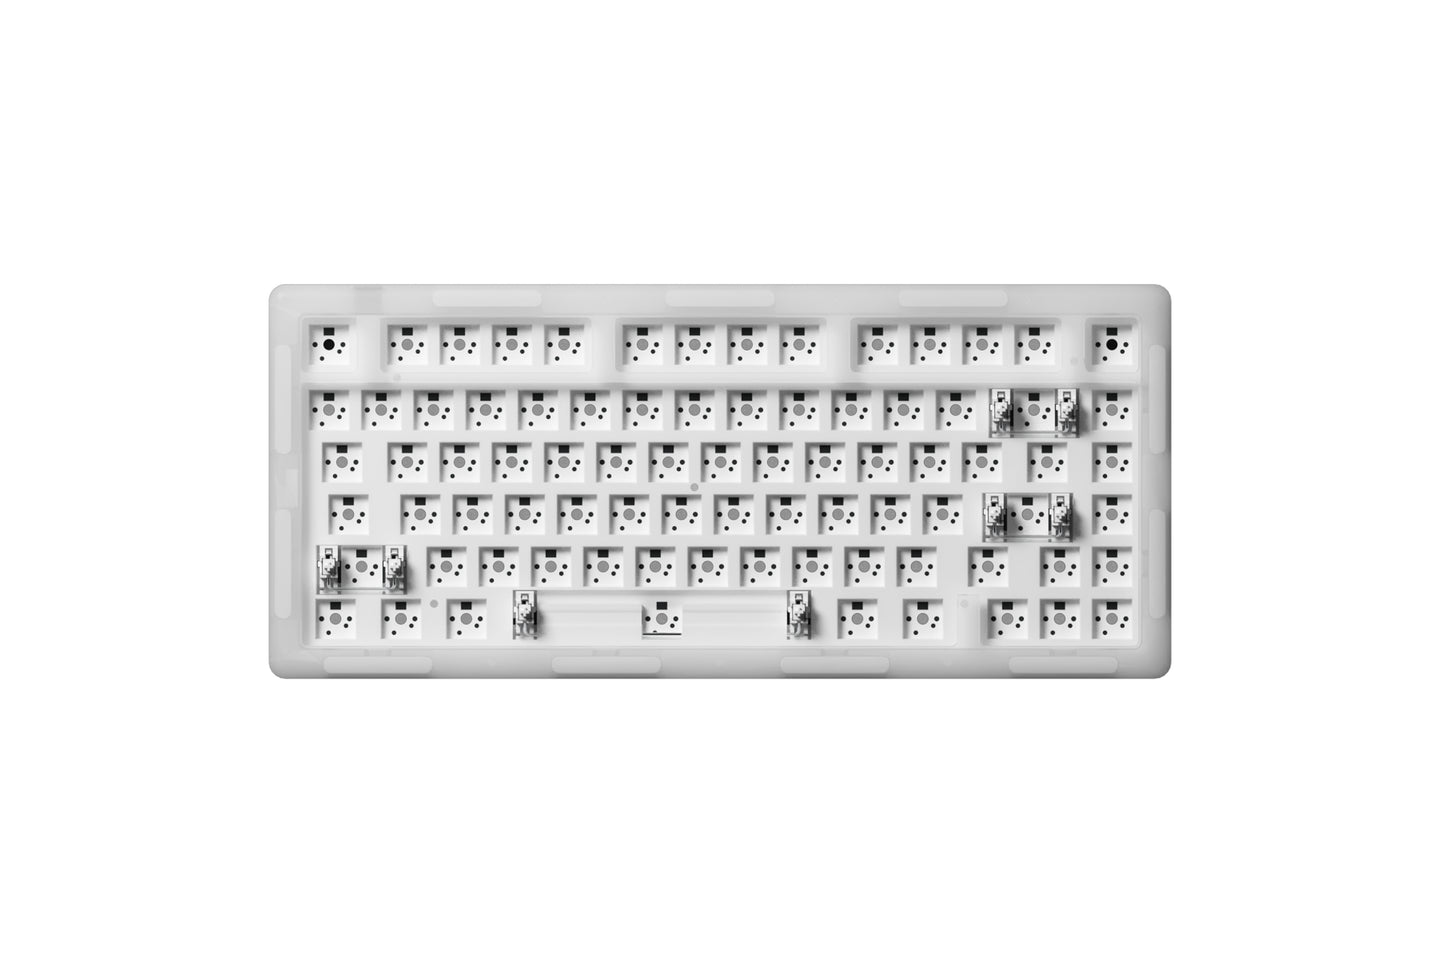 Akko ACR Pro 75 - Barebones Keyboard Kit